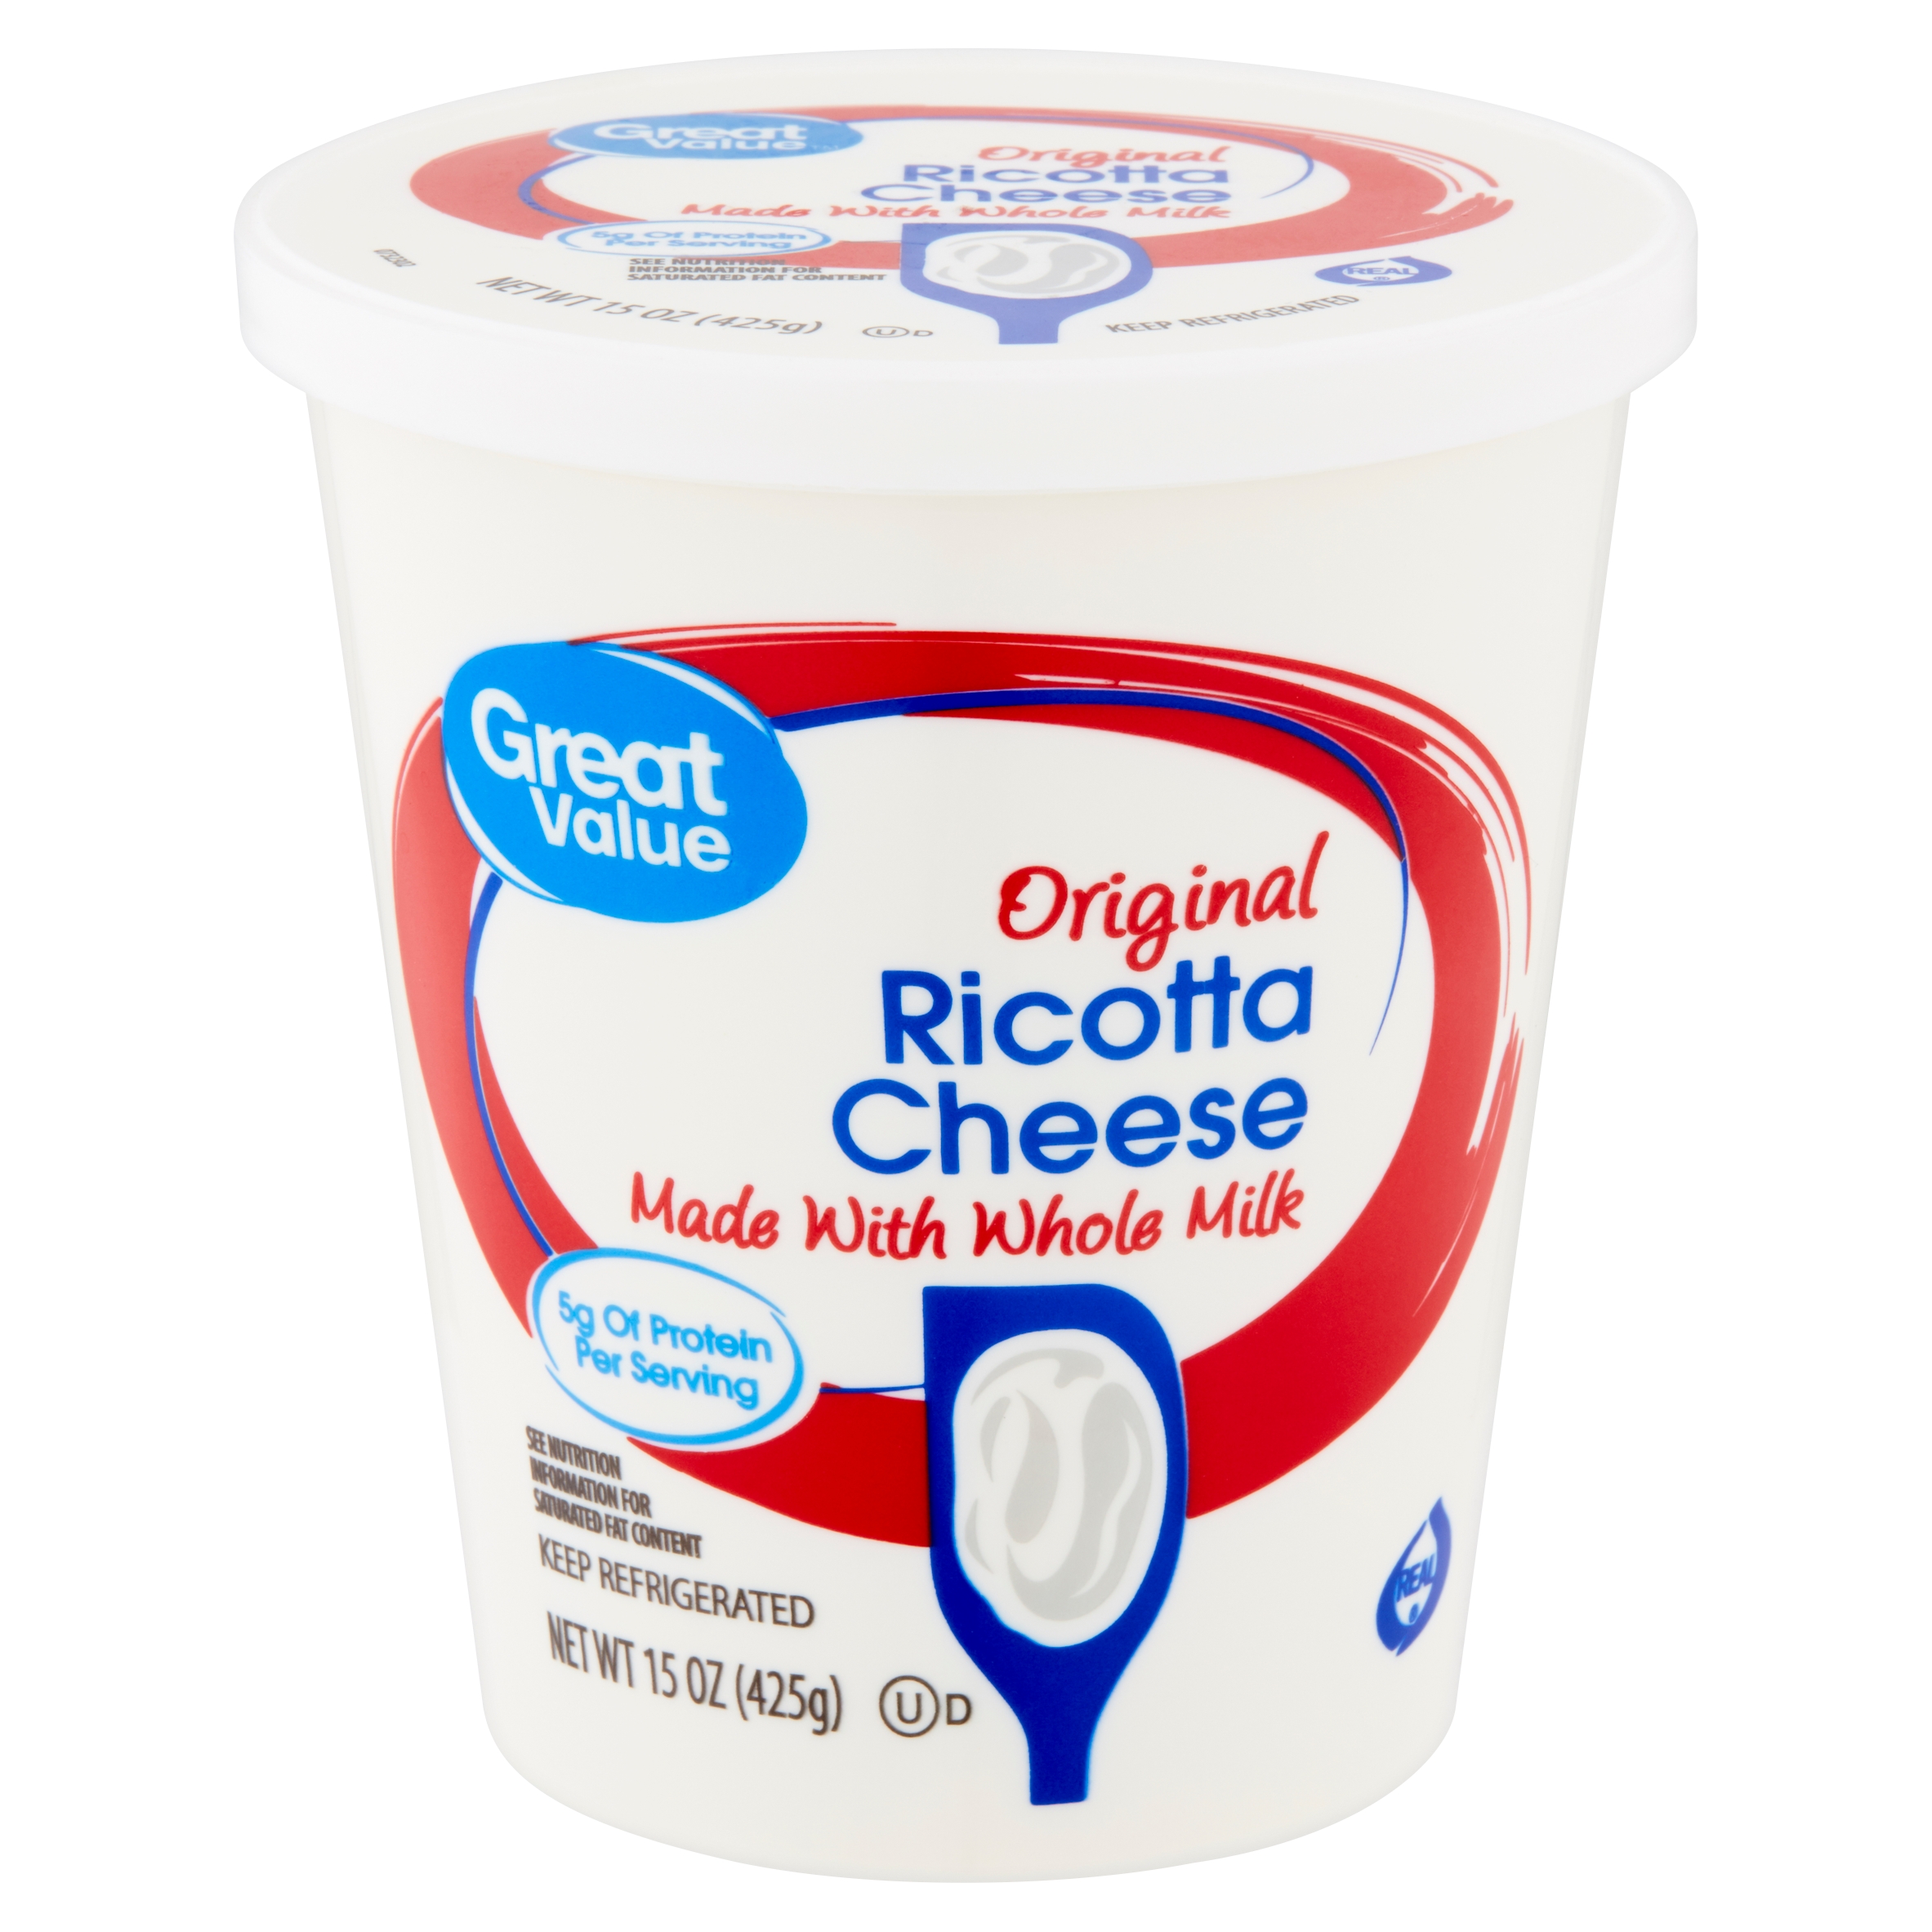 Great Value Original Ricotta Cheese, 15 Oz Image